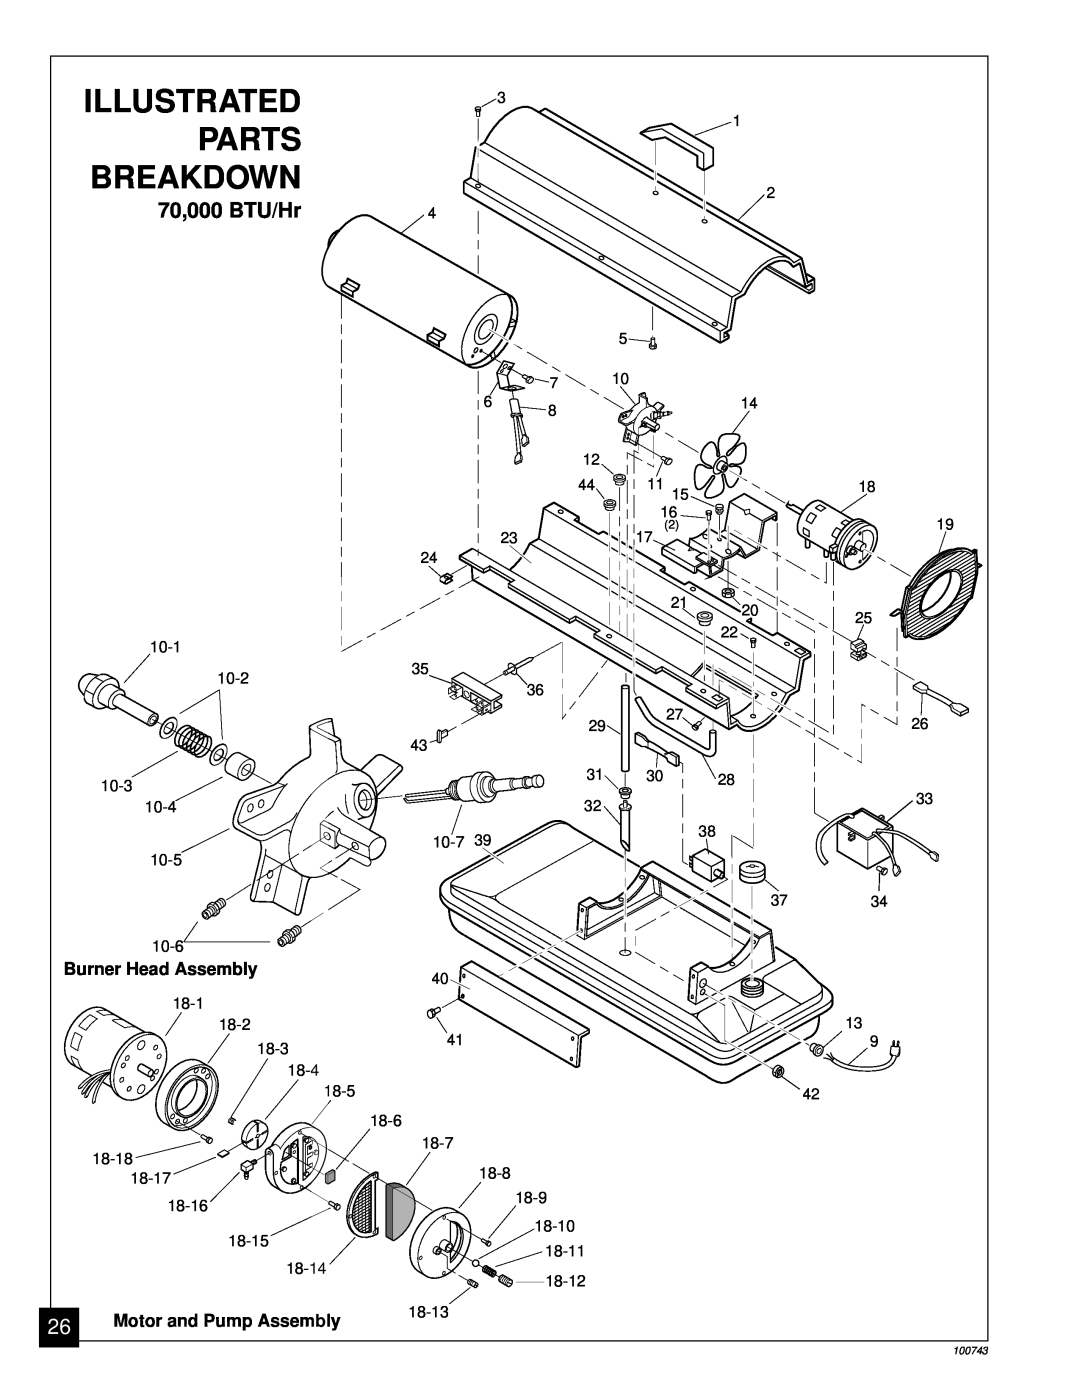 Master Lock B100, B30, B70, B150 owner manual 70,000 BTU/Hr, Illustrated, Parts, Breakdown, Burner Head Assembly 